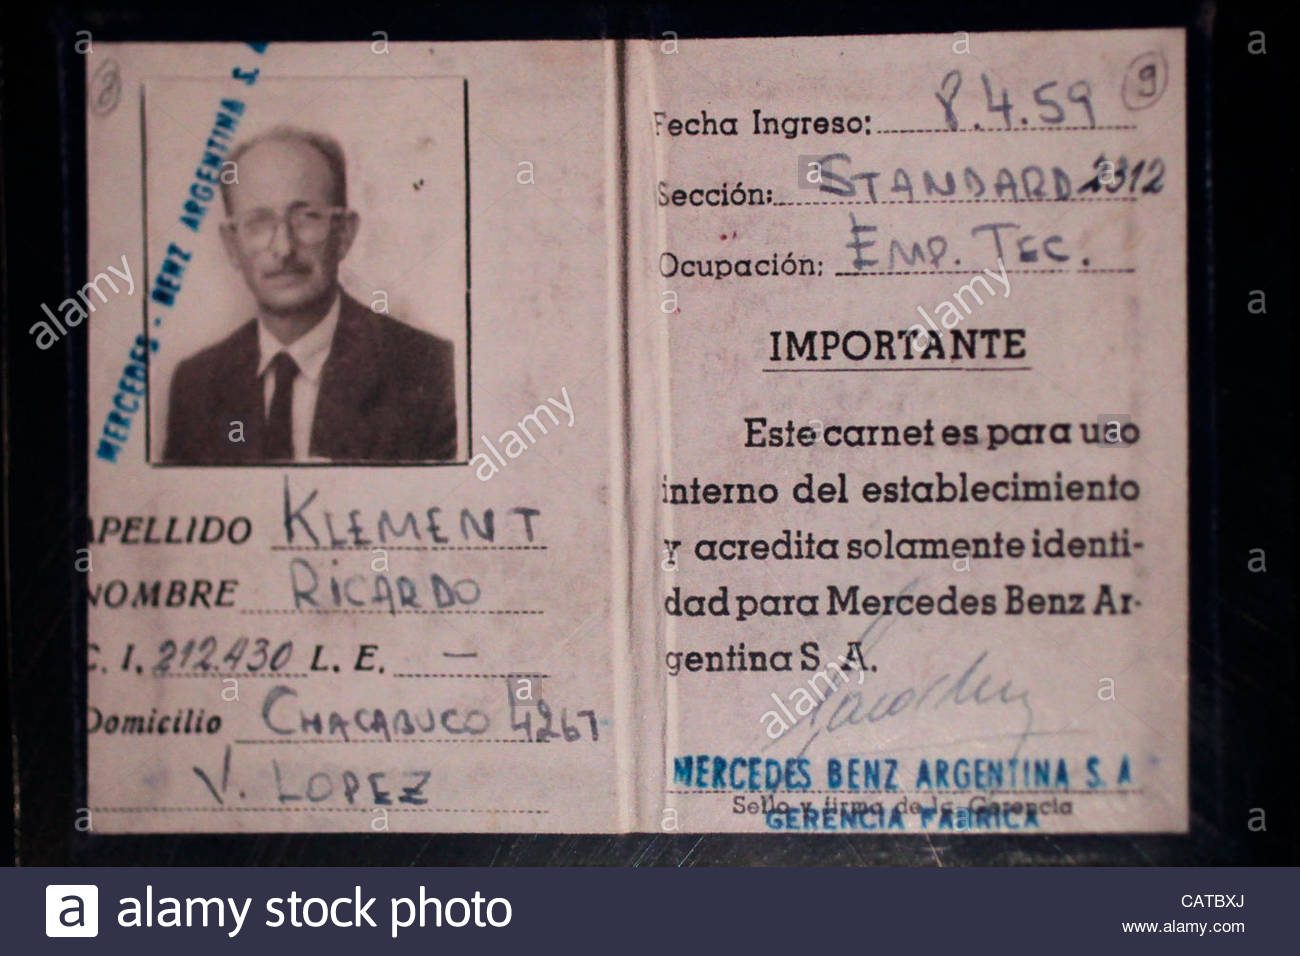 argentinean-identity-card-of-ss-nazi-officer-adolph-eichmann-on-display-CATBXJ